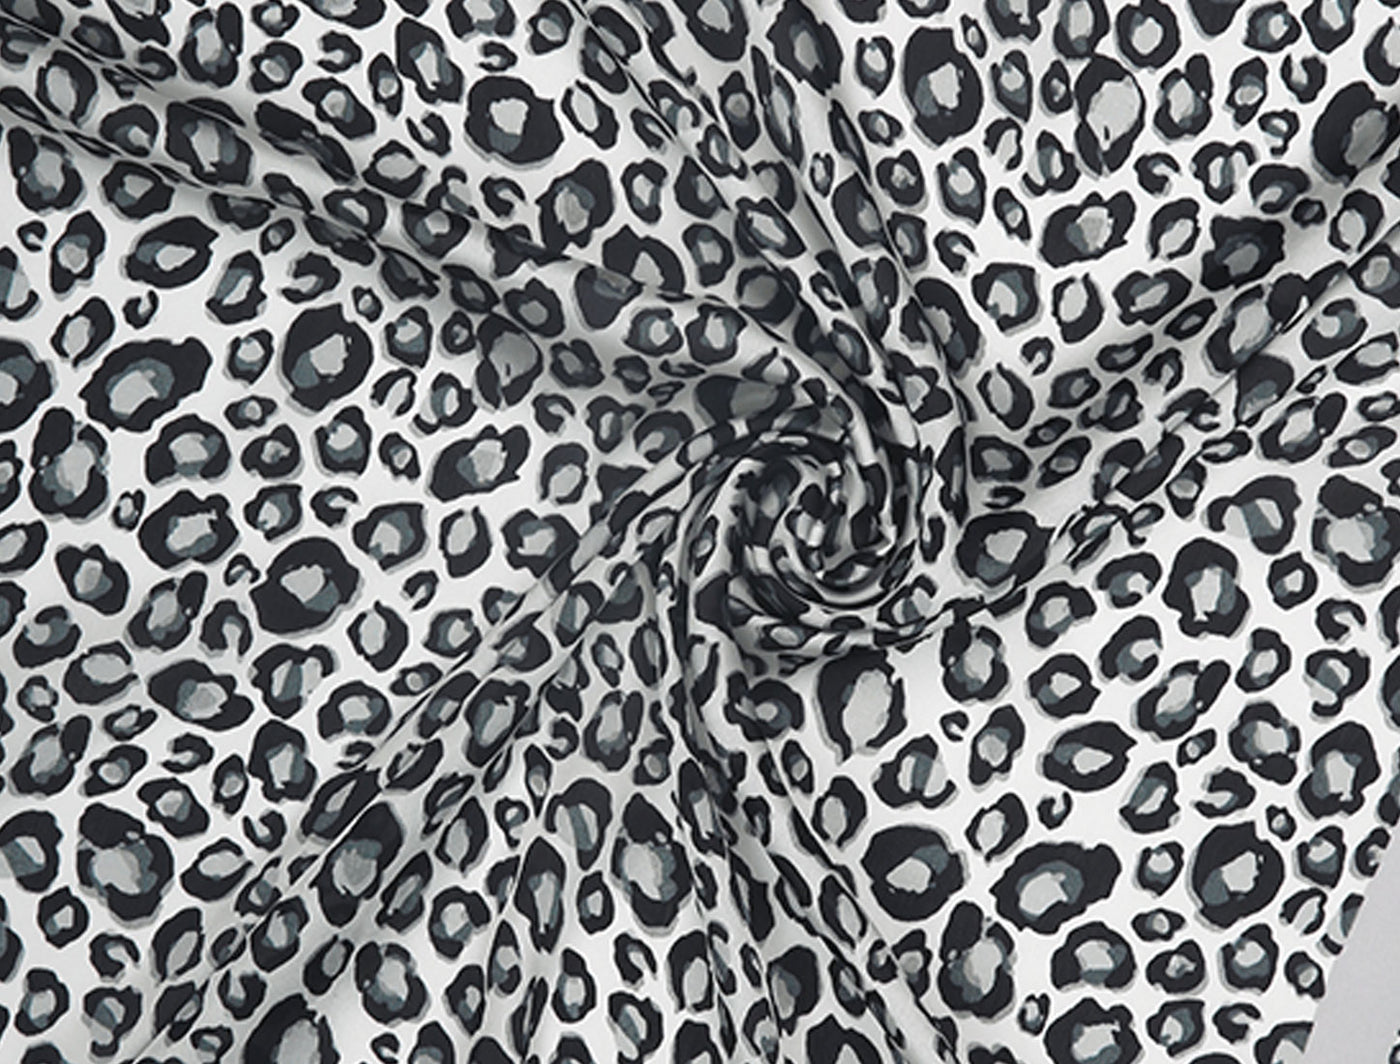 Allegra K 70cm Animal Leopard Print Silk Square Scarves Neckerchief Bandana